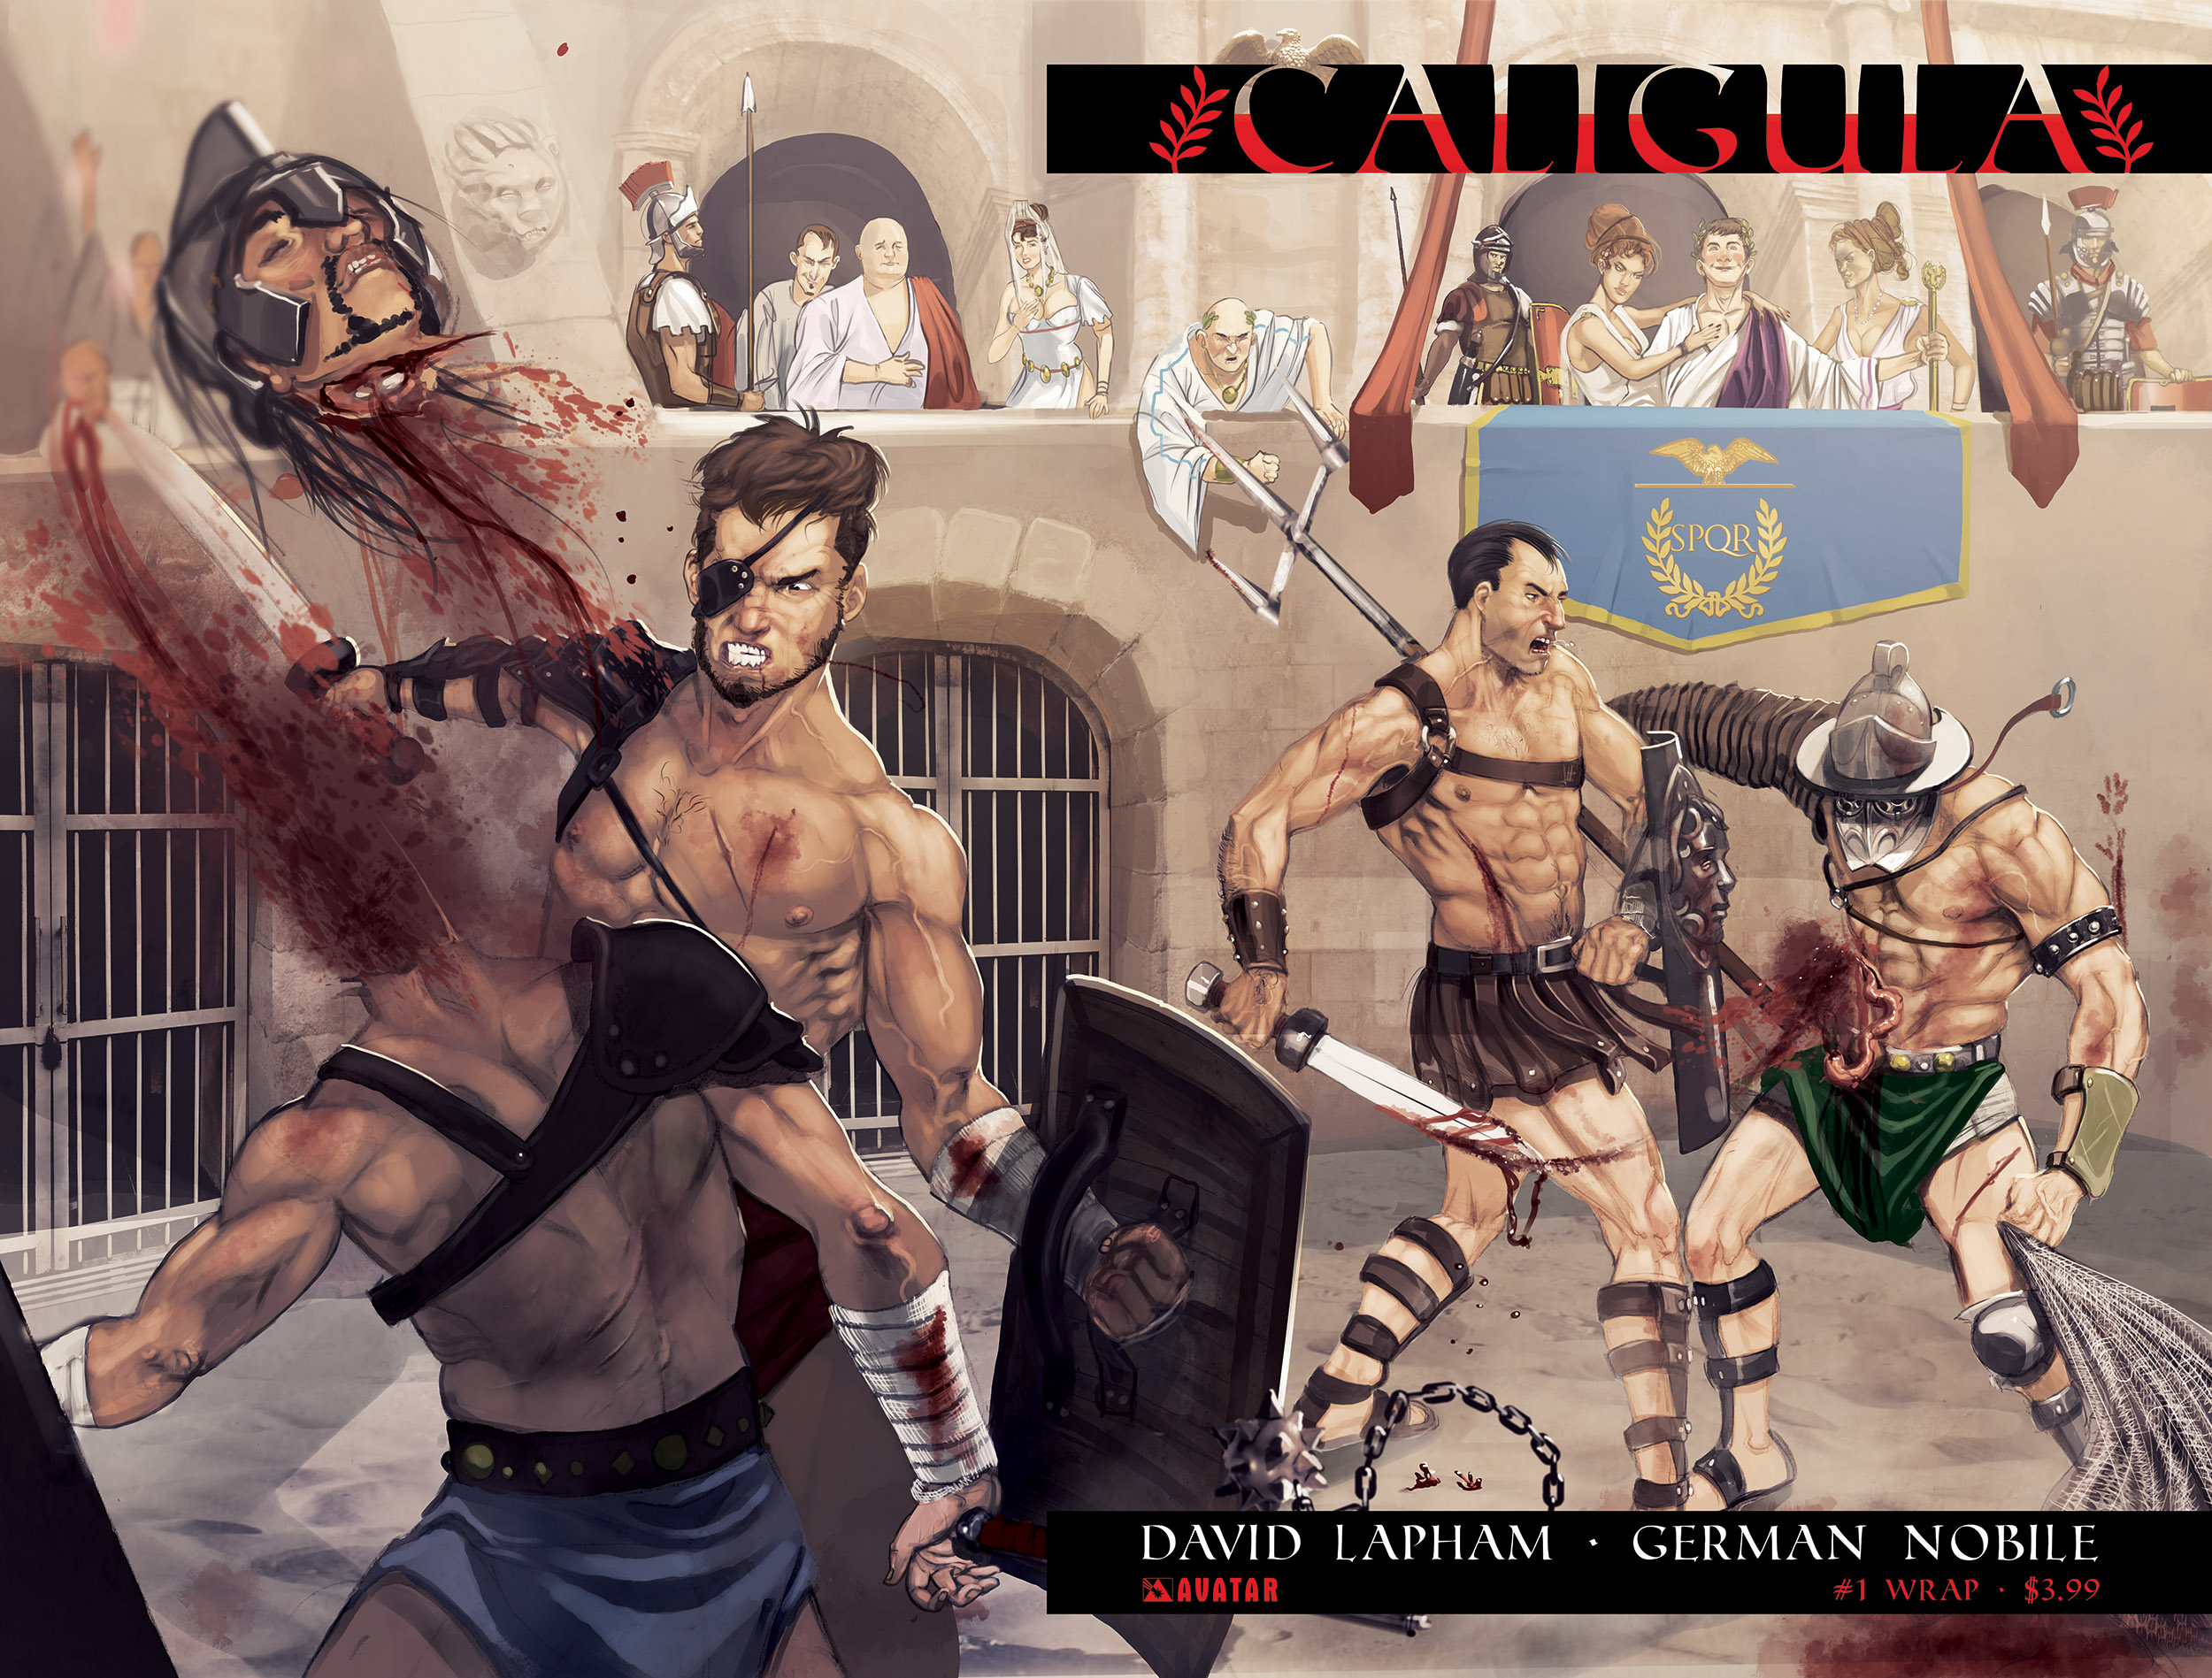 Caligula 1 Wrap